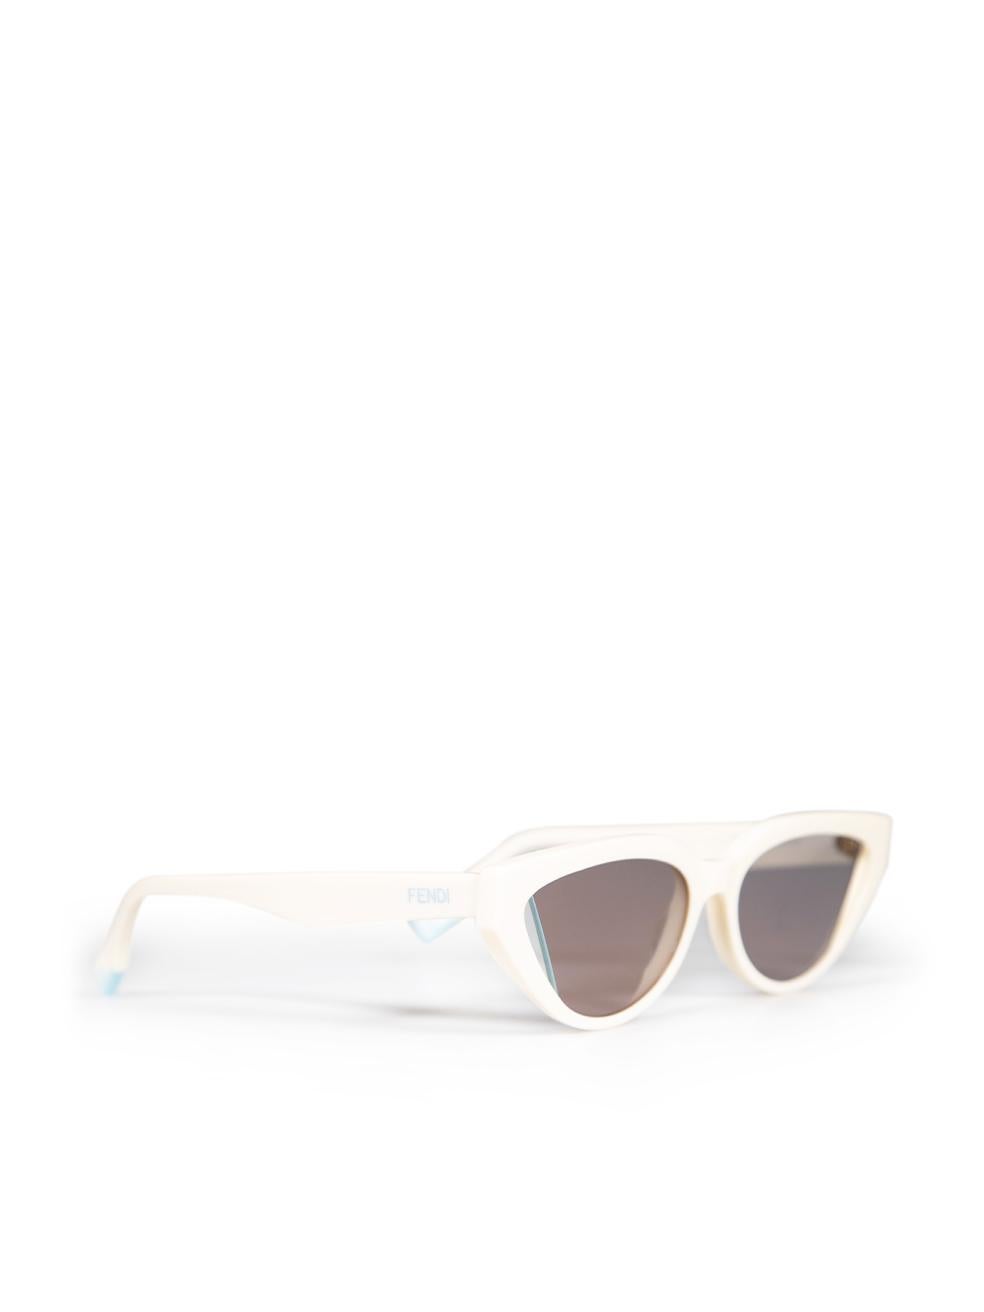 Fendi Fendi Way Cat Eye Sunglasses In New Condition For Sale In London, GB